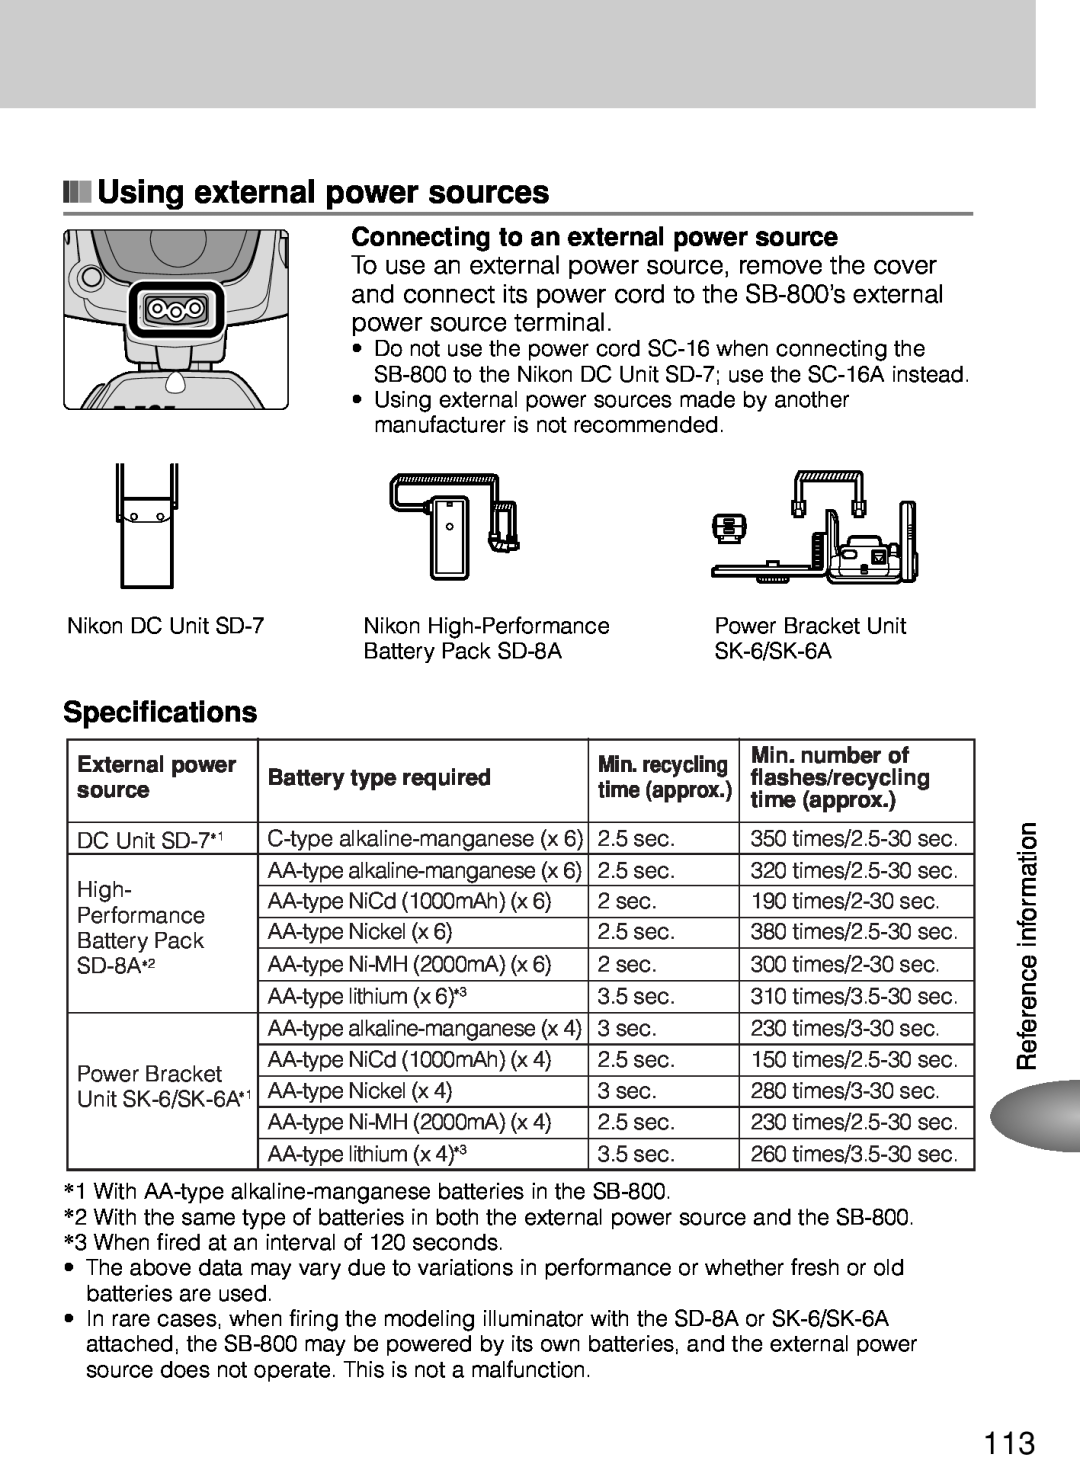 Nikon SB-800 Using external power sources, Specifications, Connecting to an external power source, External power 